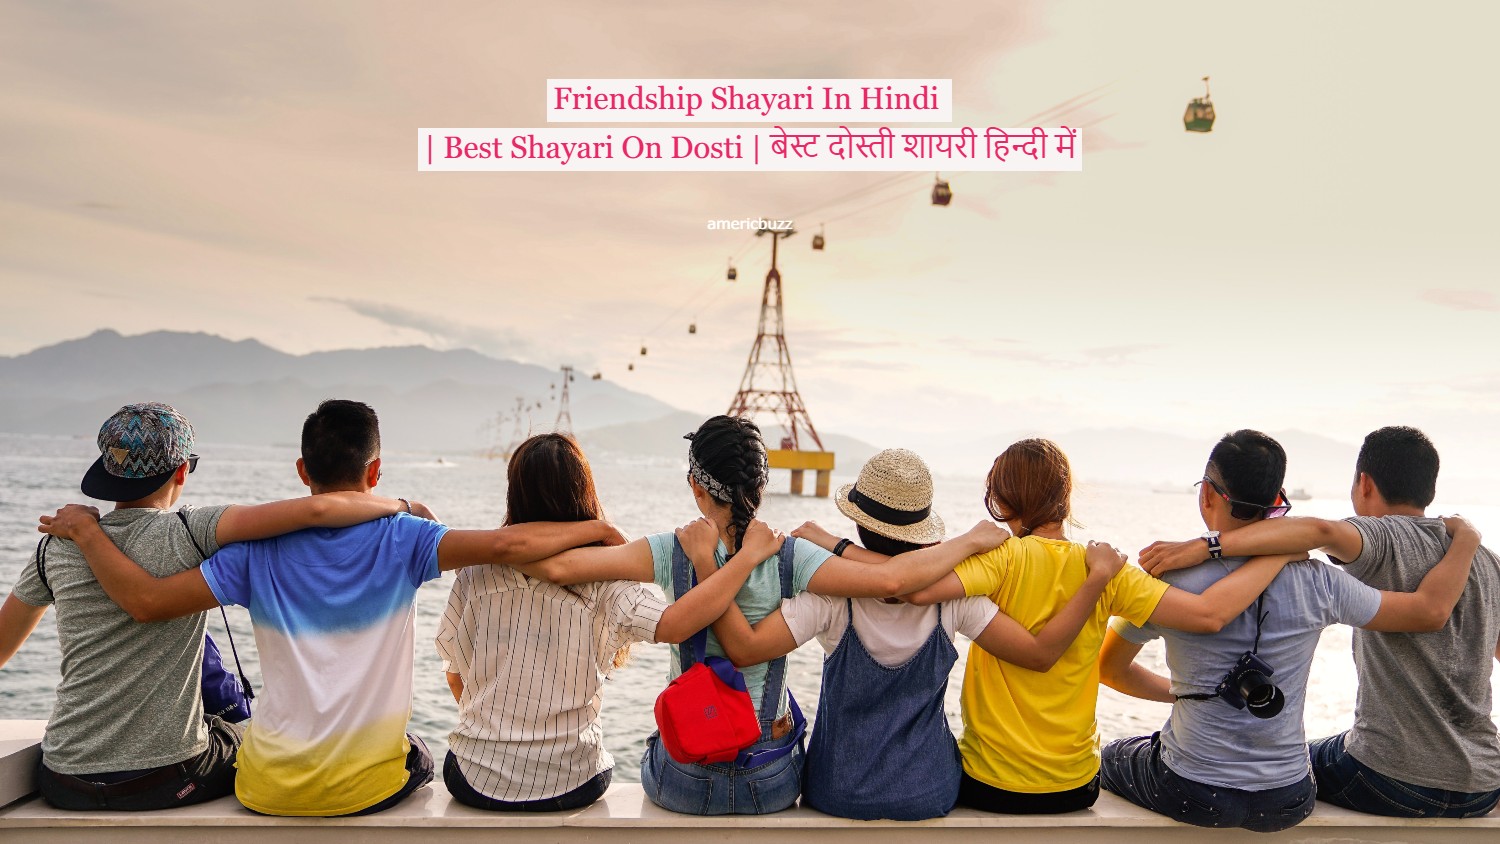 Friendship Shayari In Hindi | Best Shayari On Dosti | बेस्ट दोस्ती शायरी हिन्दी में